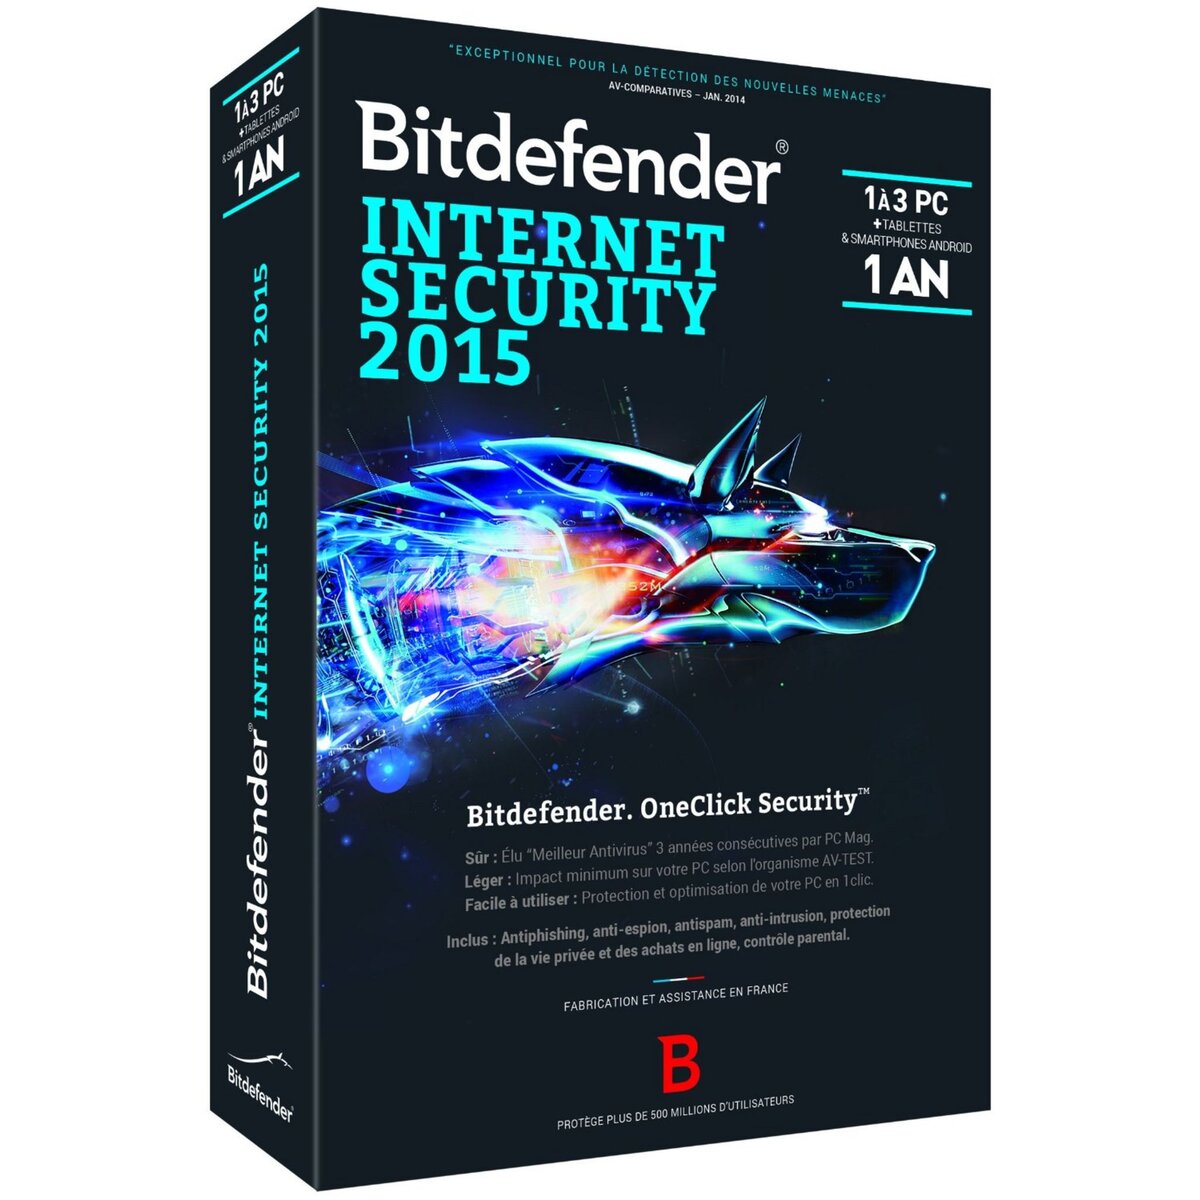 Bitdefender Internet Security 2015 - 1 An/3 PC